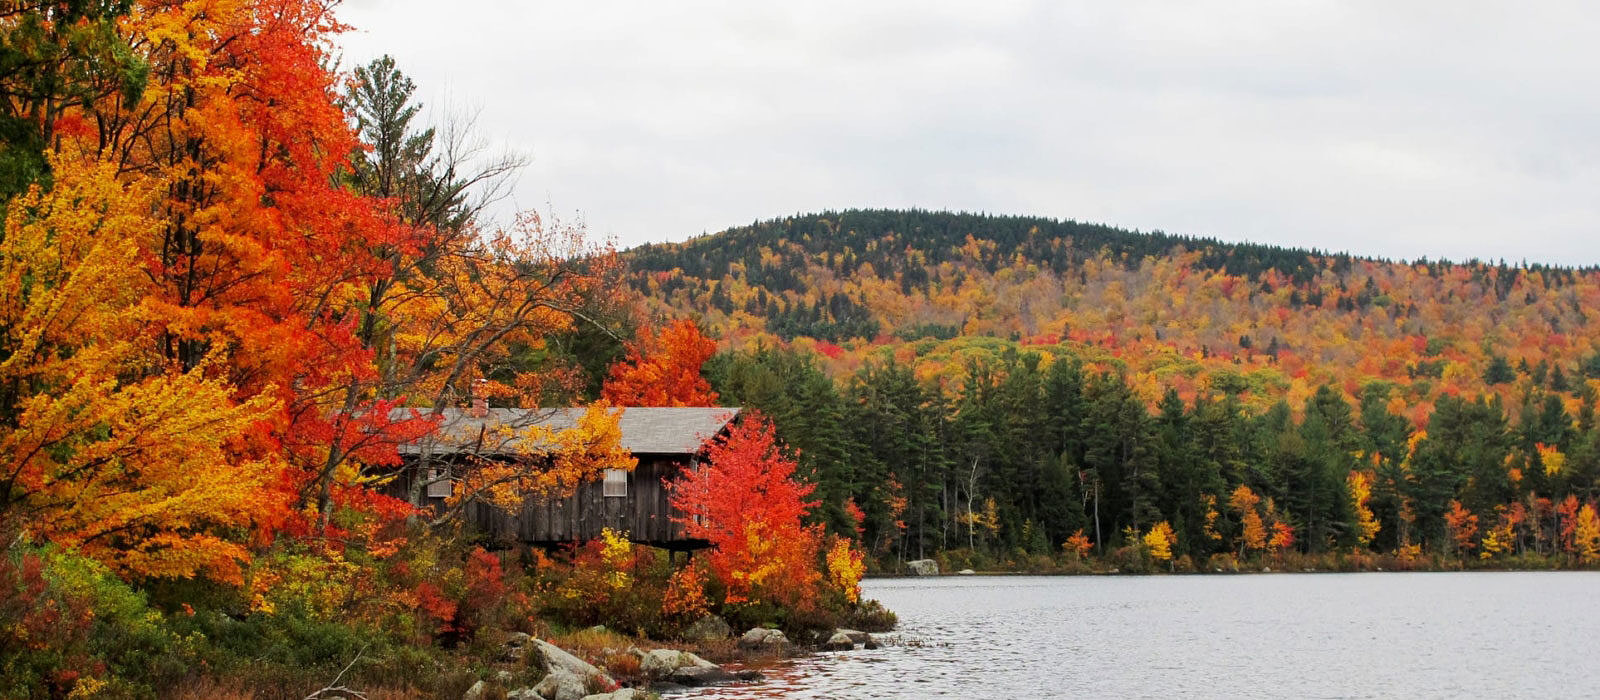 Hunts Pond in autumn glory. (photo © Brett Amy Thelen)